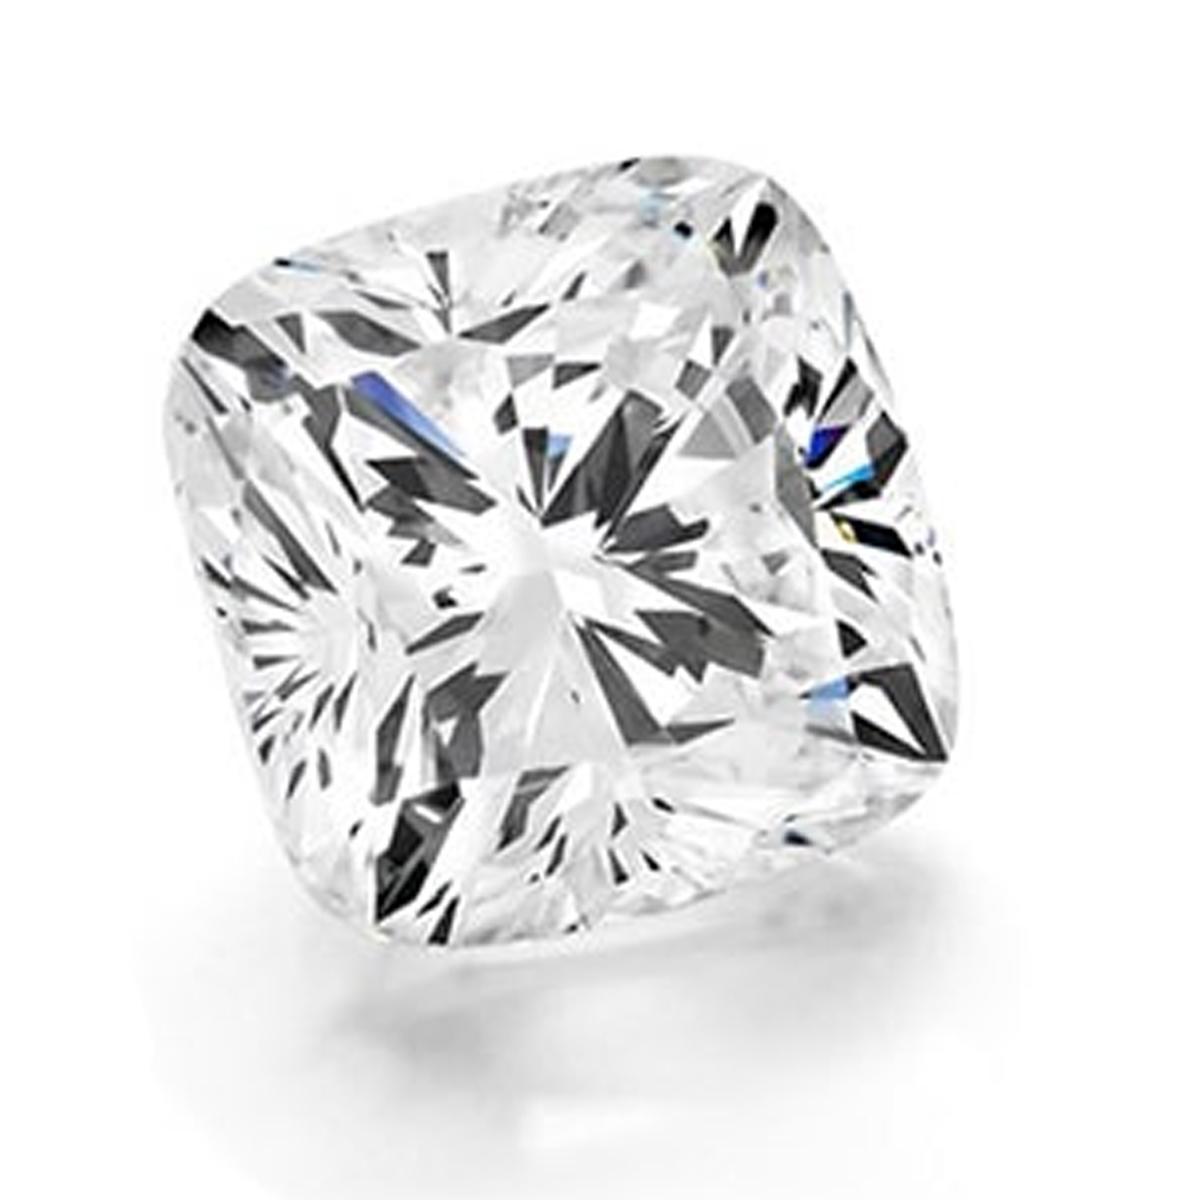 1.07 ctw. VVS2 IGI Certified Cushion Cut Loose Diamond (LAB GROWN)